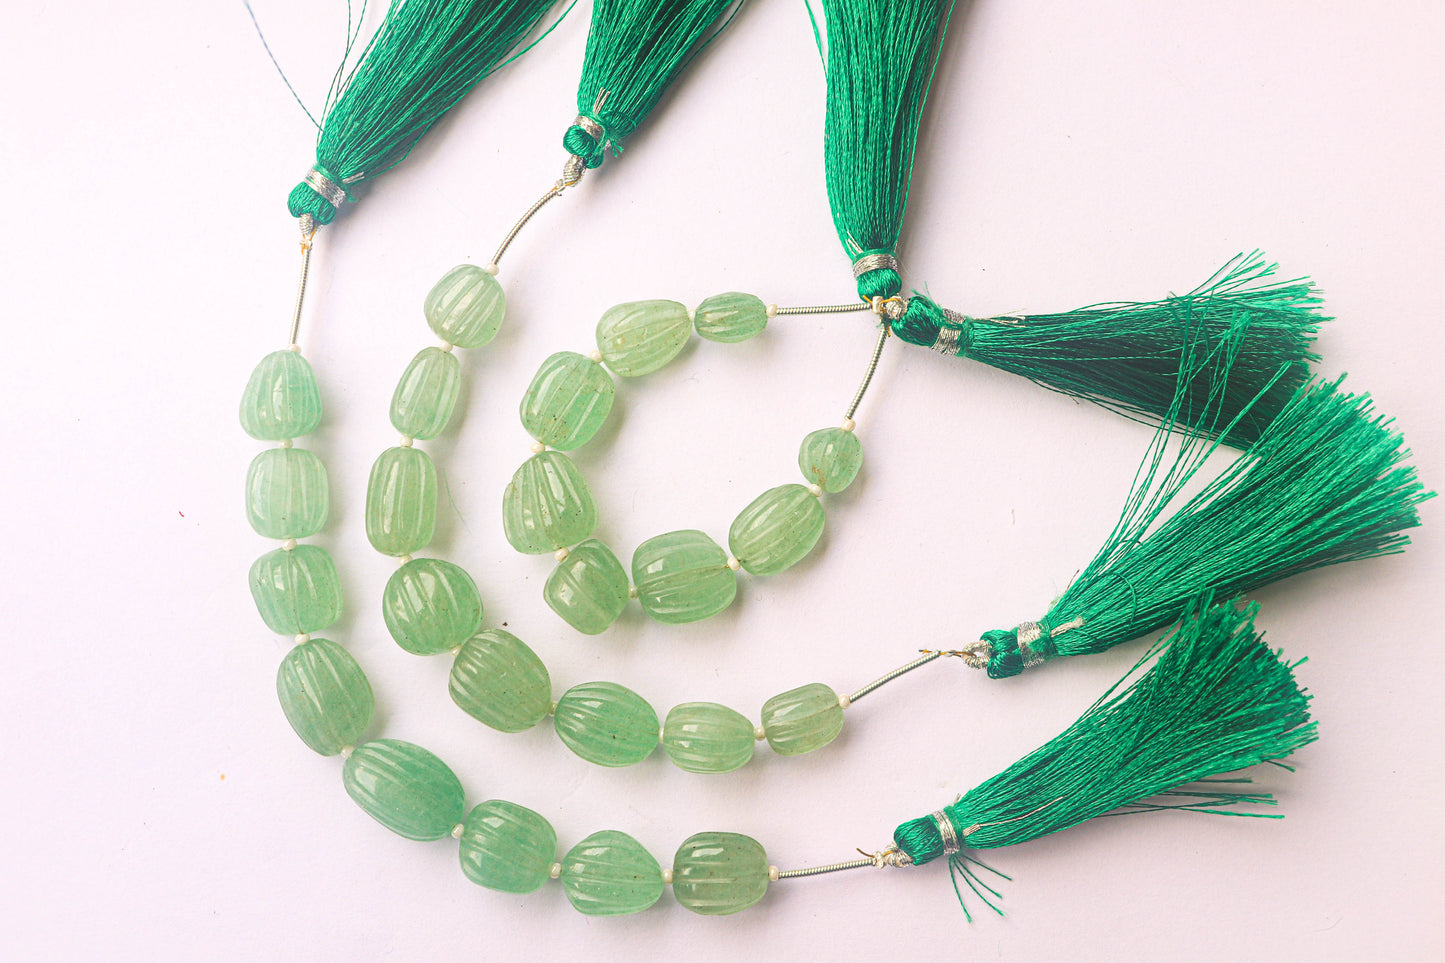 Green Aventurine Carving Tumble Beads Beadsforyourjewelry